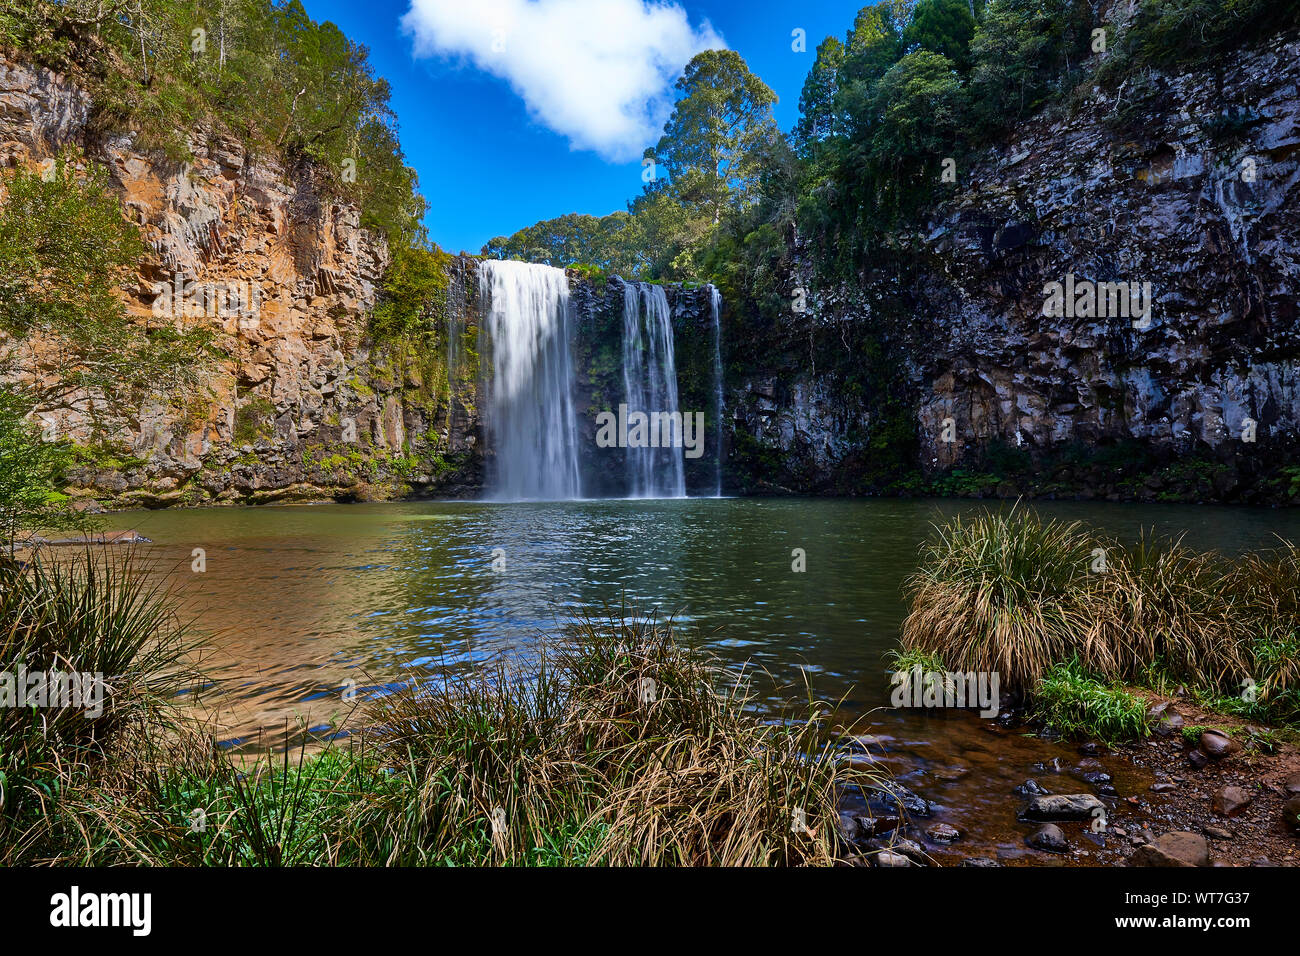 Dangar Falls a cascade waterfall on the Bielsdown river in the Dorrigo National Park, Dorrigo near Coffs Harbour, New South Wales, Australia Stock Photo